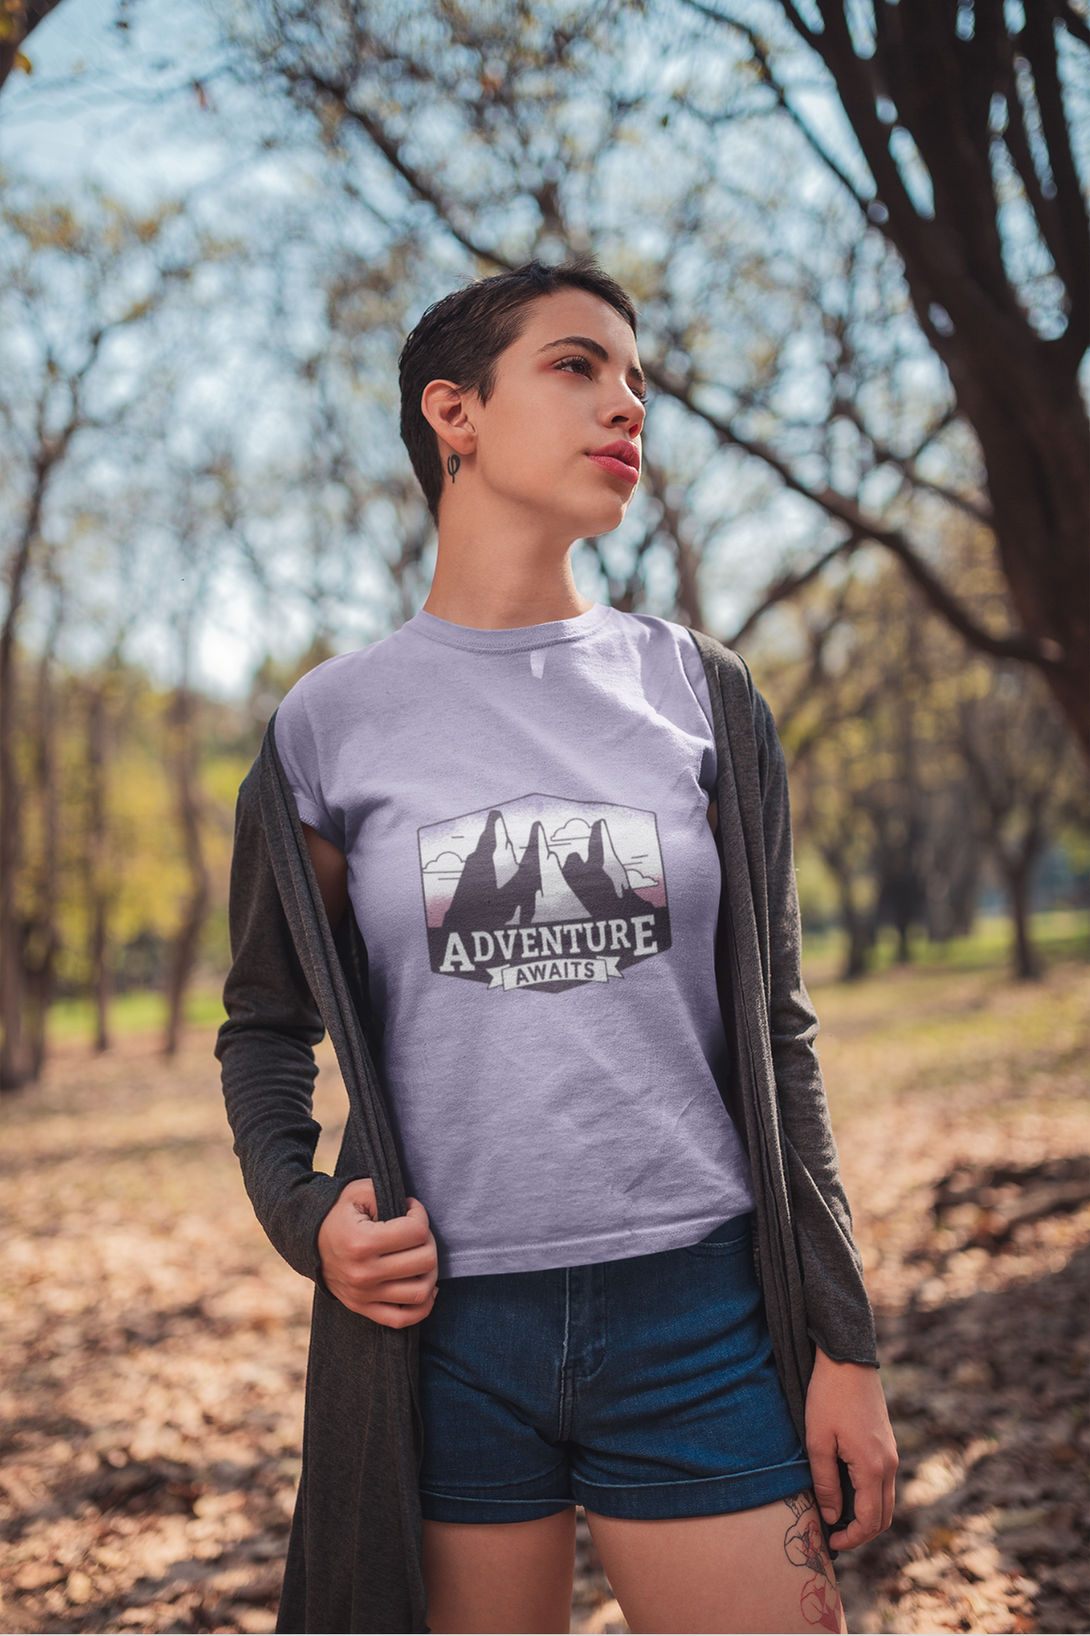 Adventure Awaits Printed T-Shirt For Women - WowWaves - 2